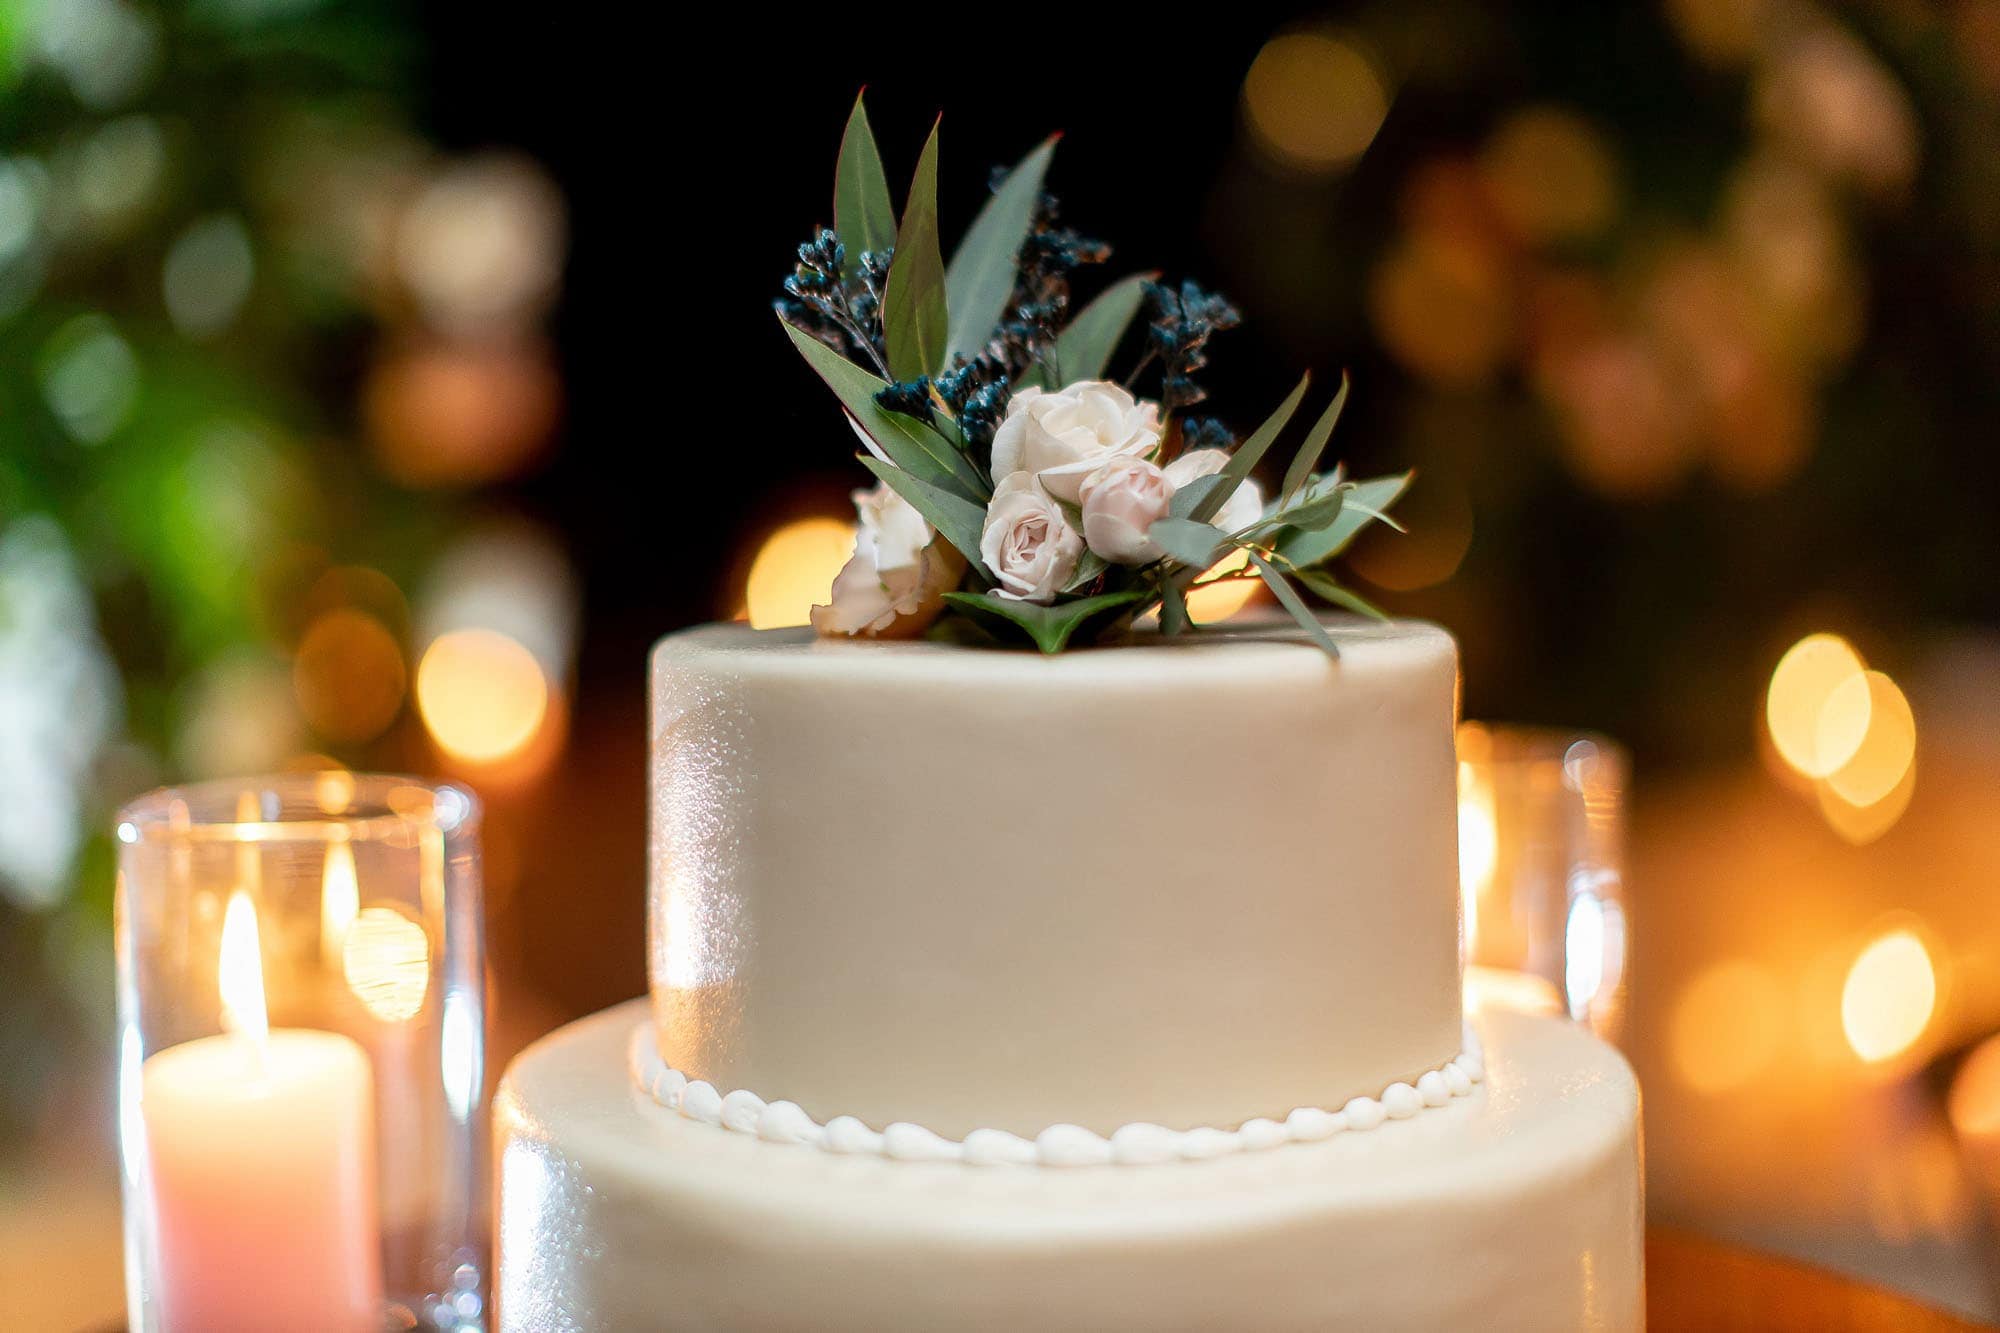 Closeup of the wedding cake